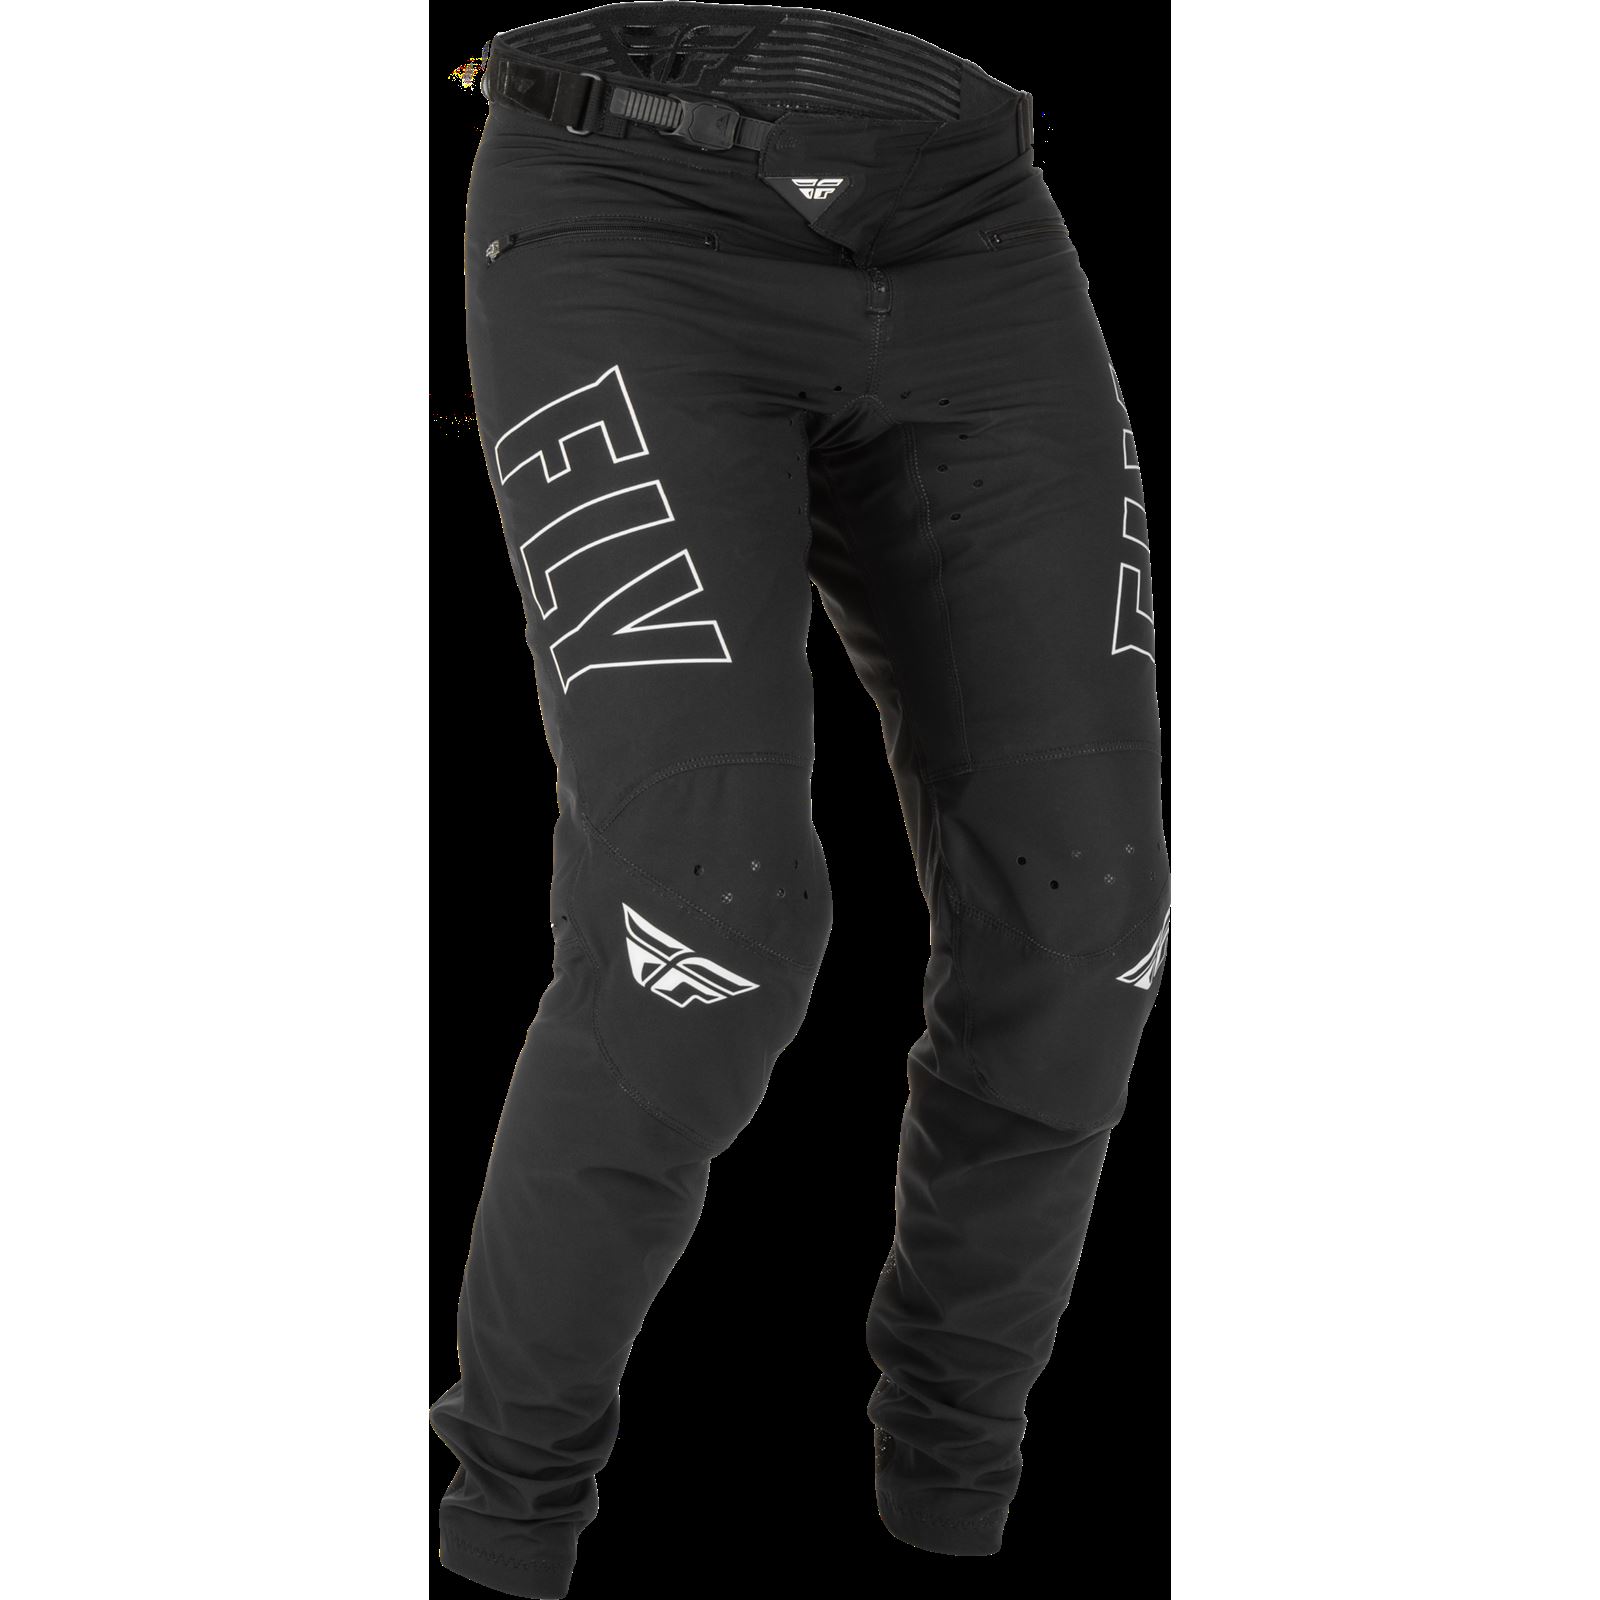 FLY Racing Youth Radium Bicycle Pants (Black/Grey, Youth US 26